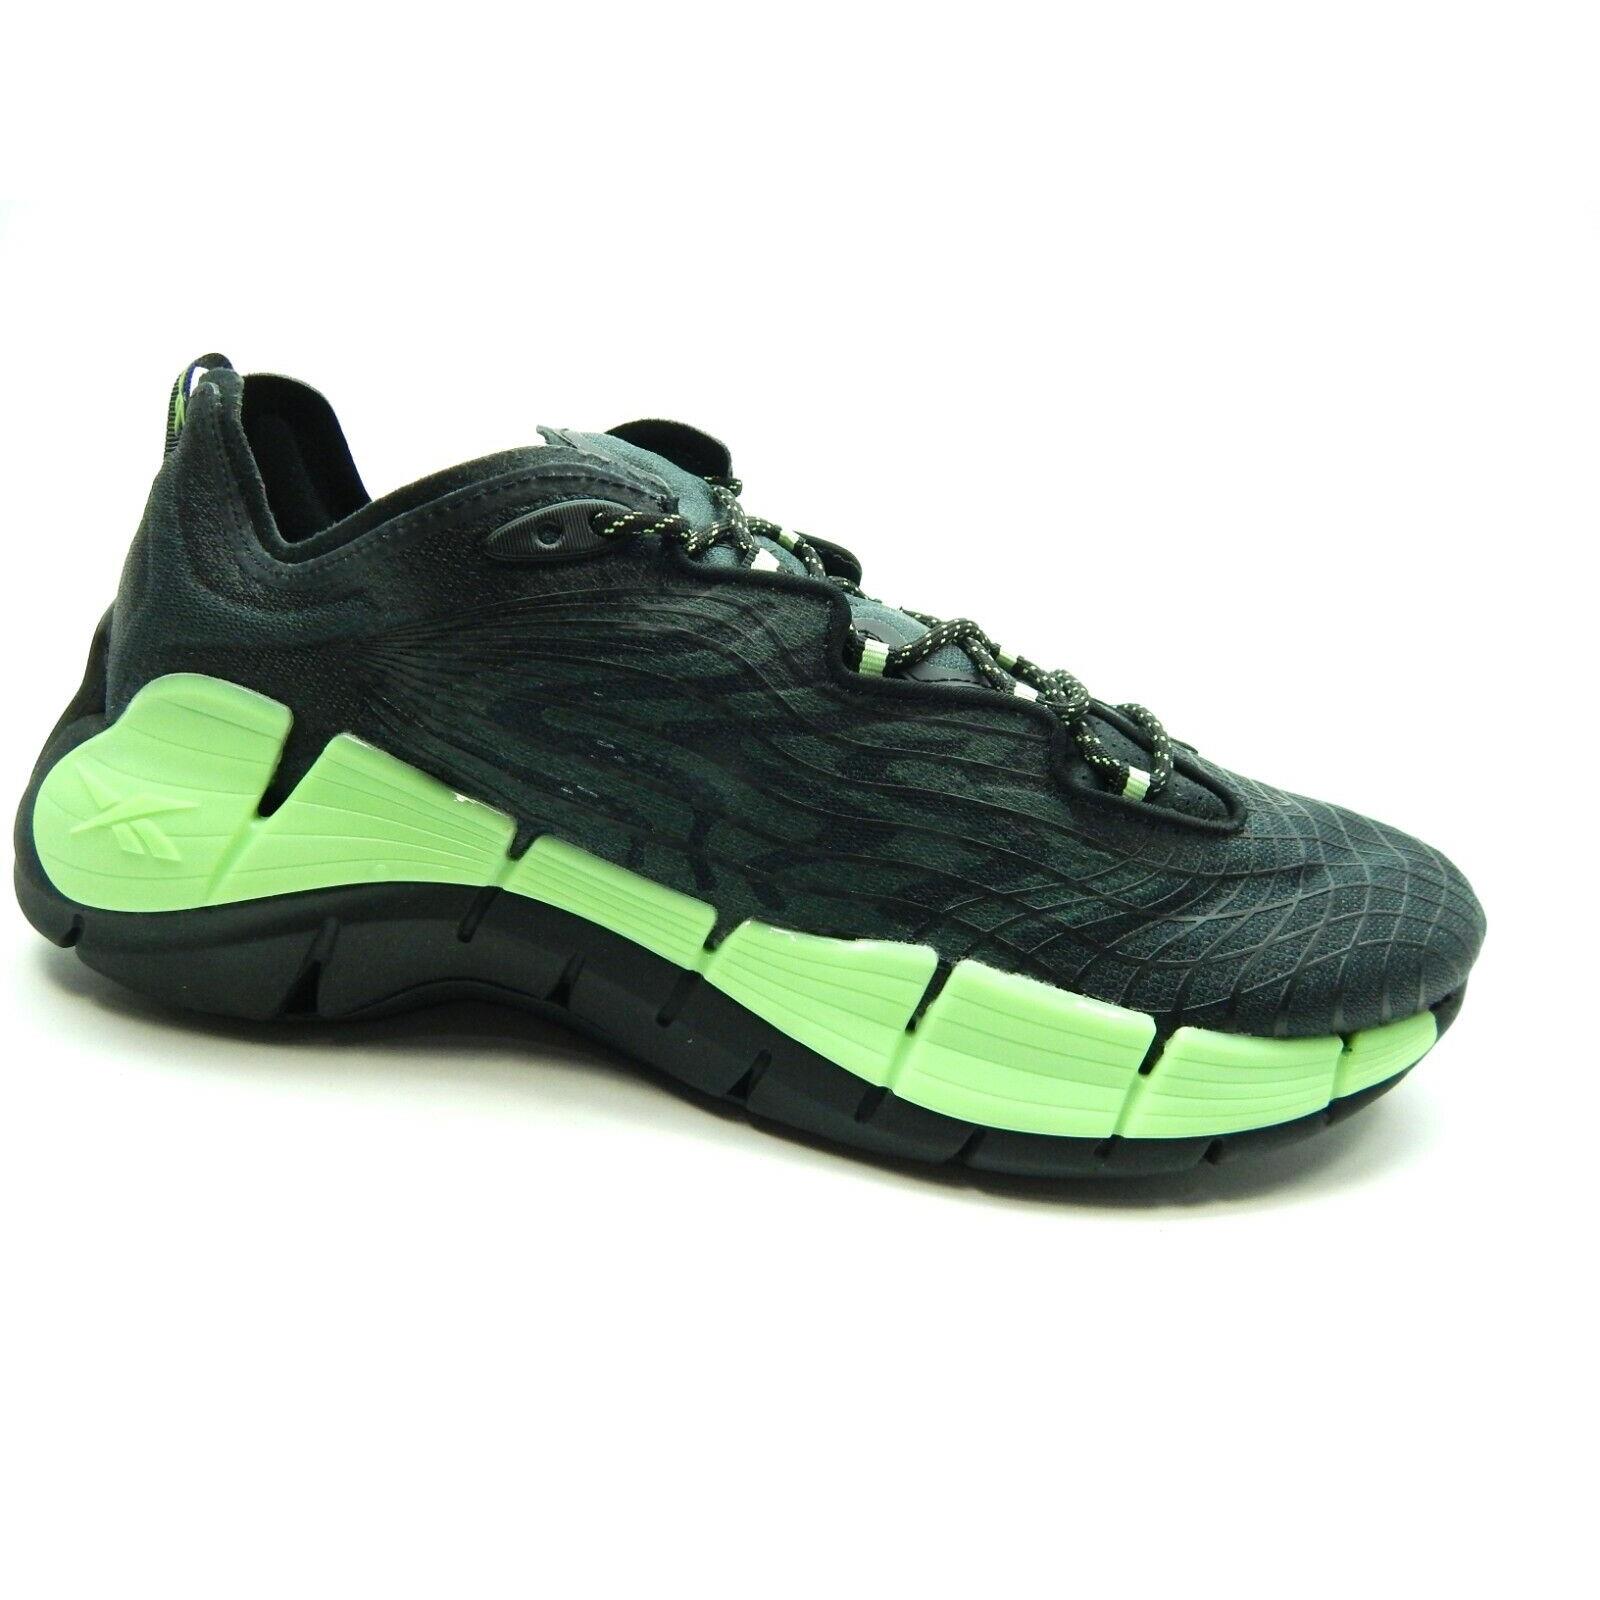 Reebok Zig Kinetica II G58281 Black Neon Mint Running Men Shoes